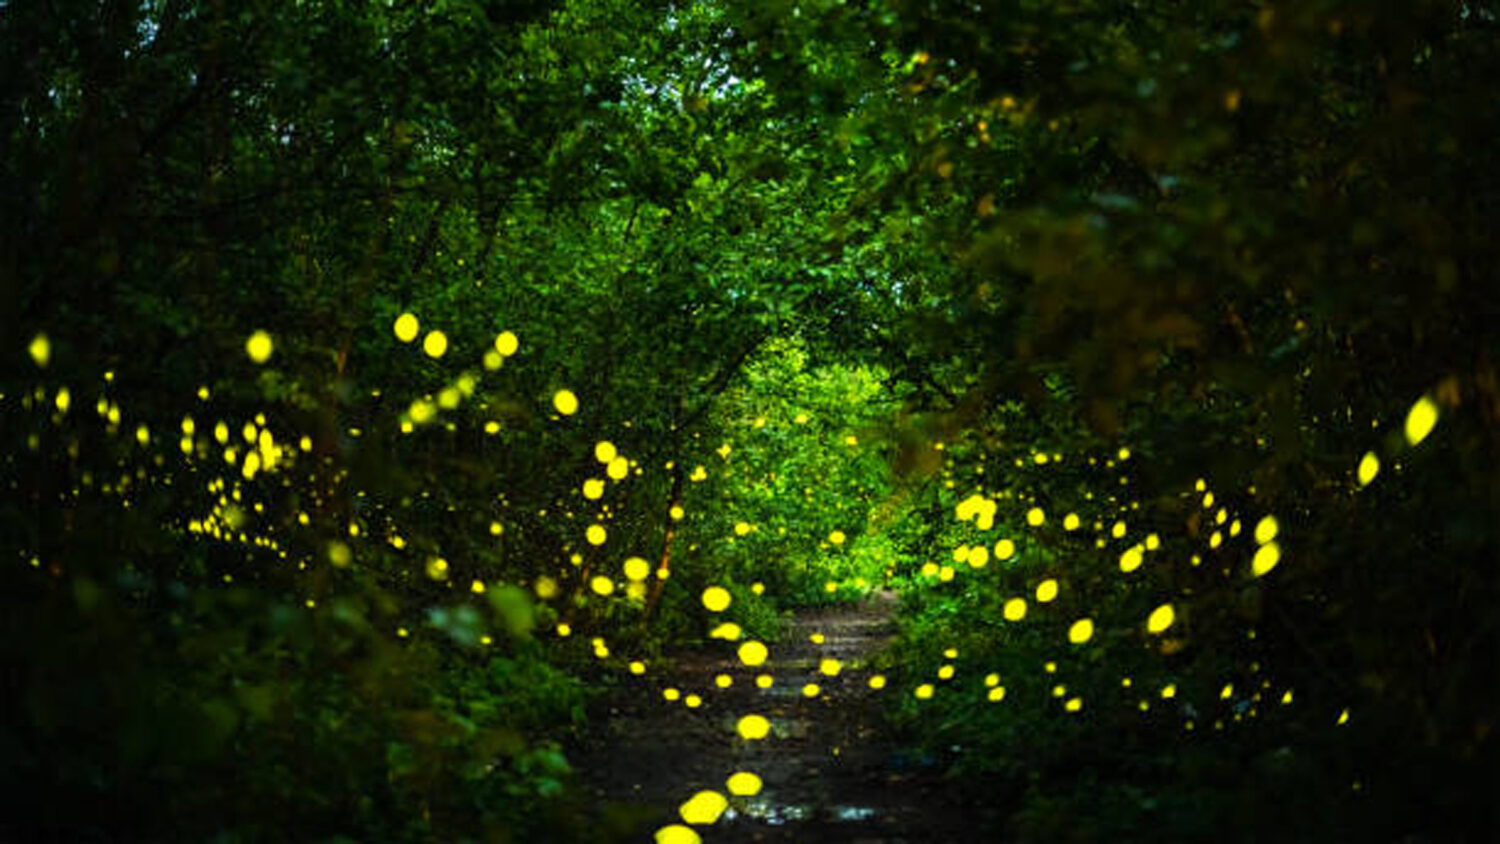 Fireflies in the woods